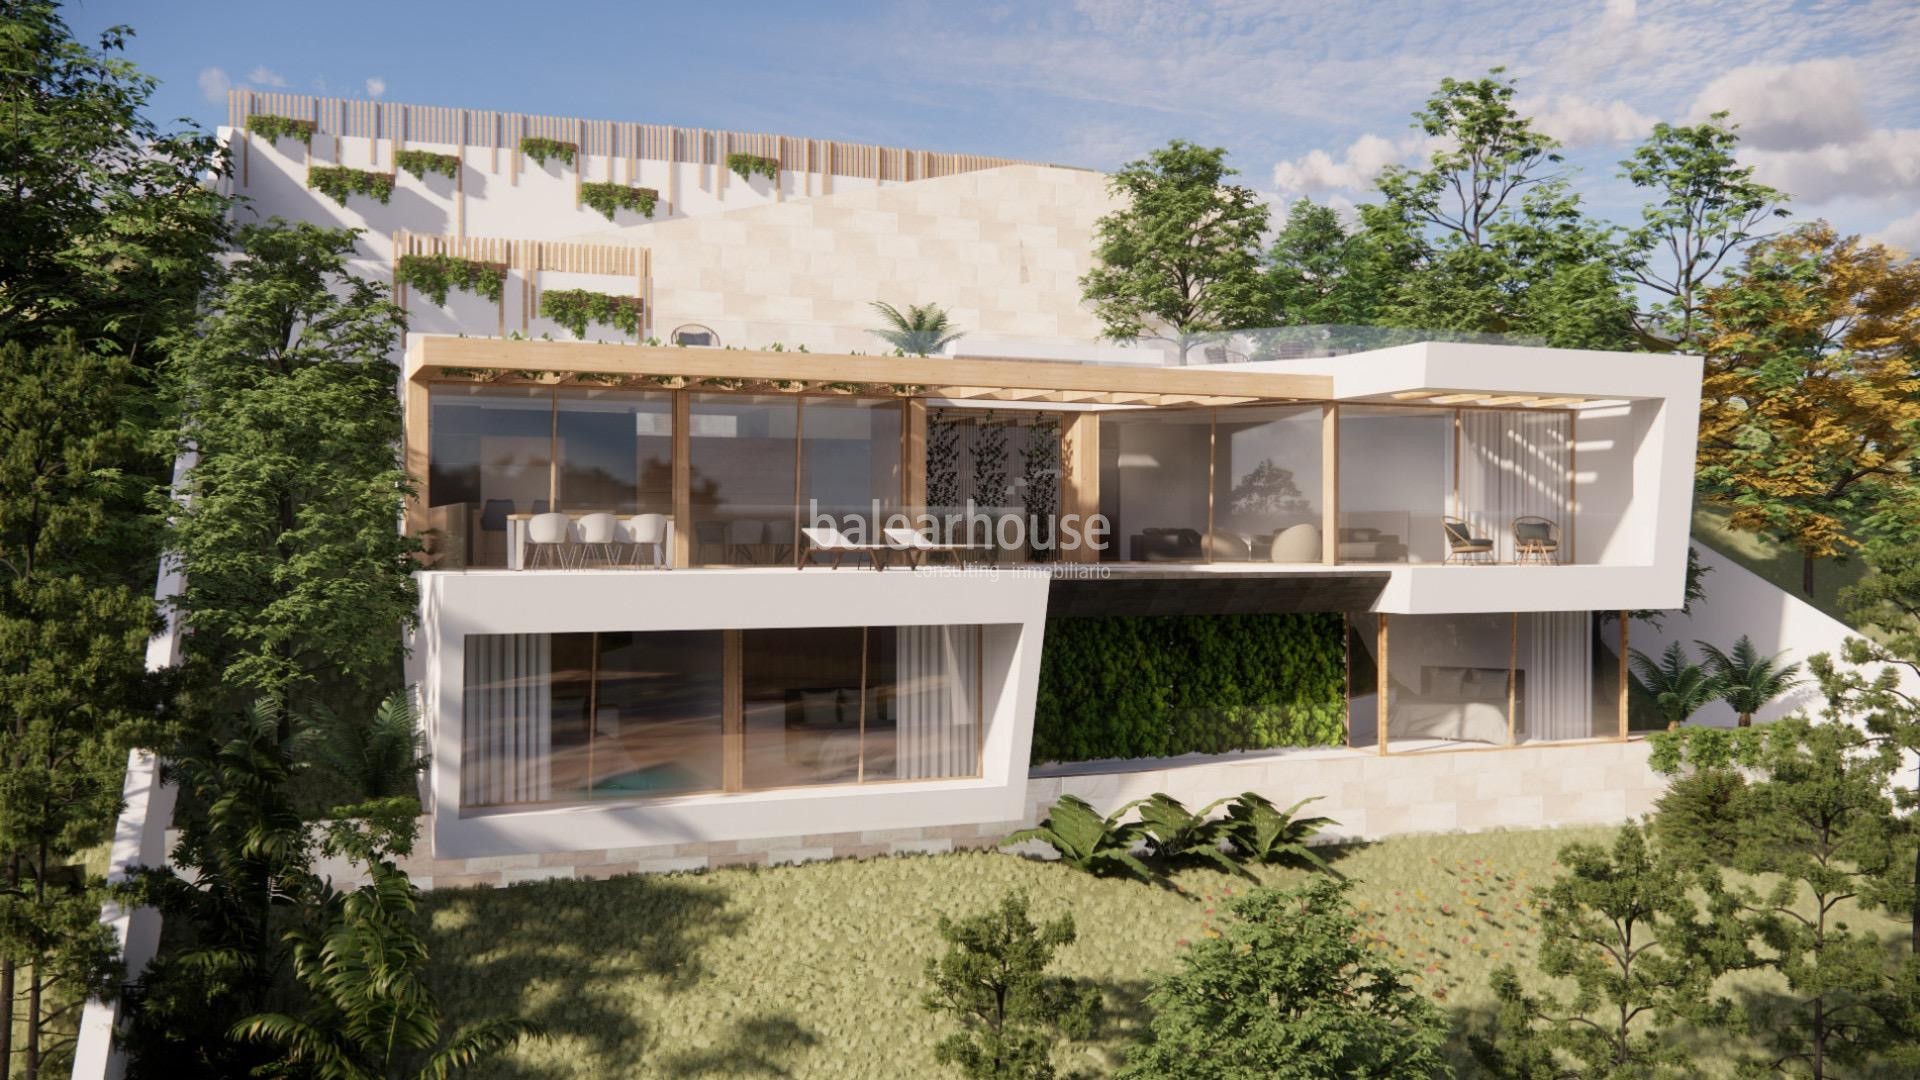 Excellent new built villa in Costa de la Calma with sea view and access to the beach.